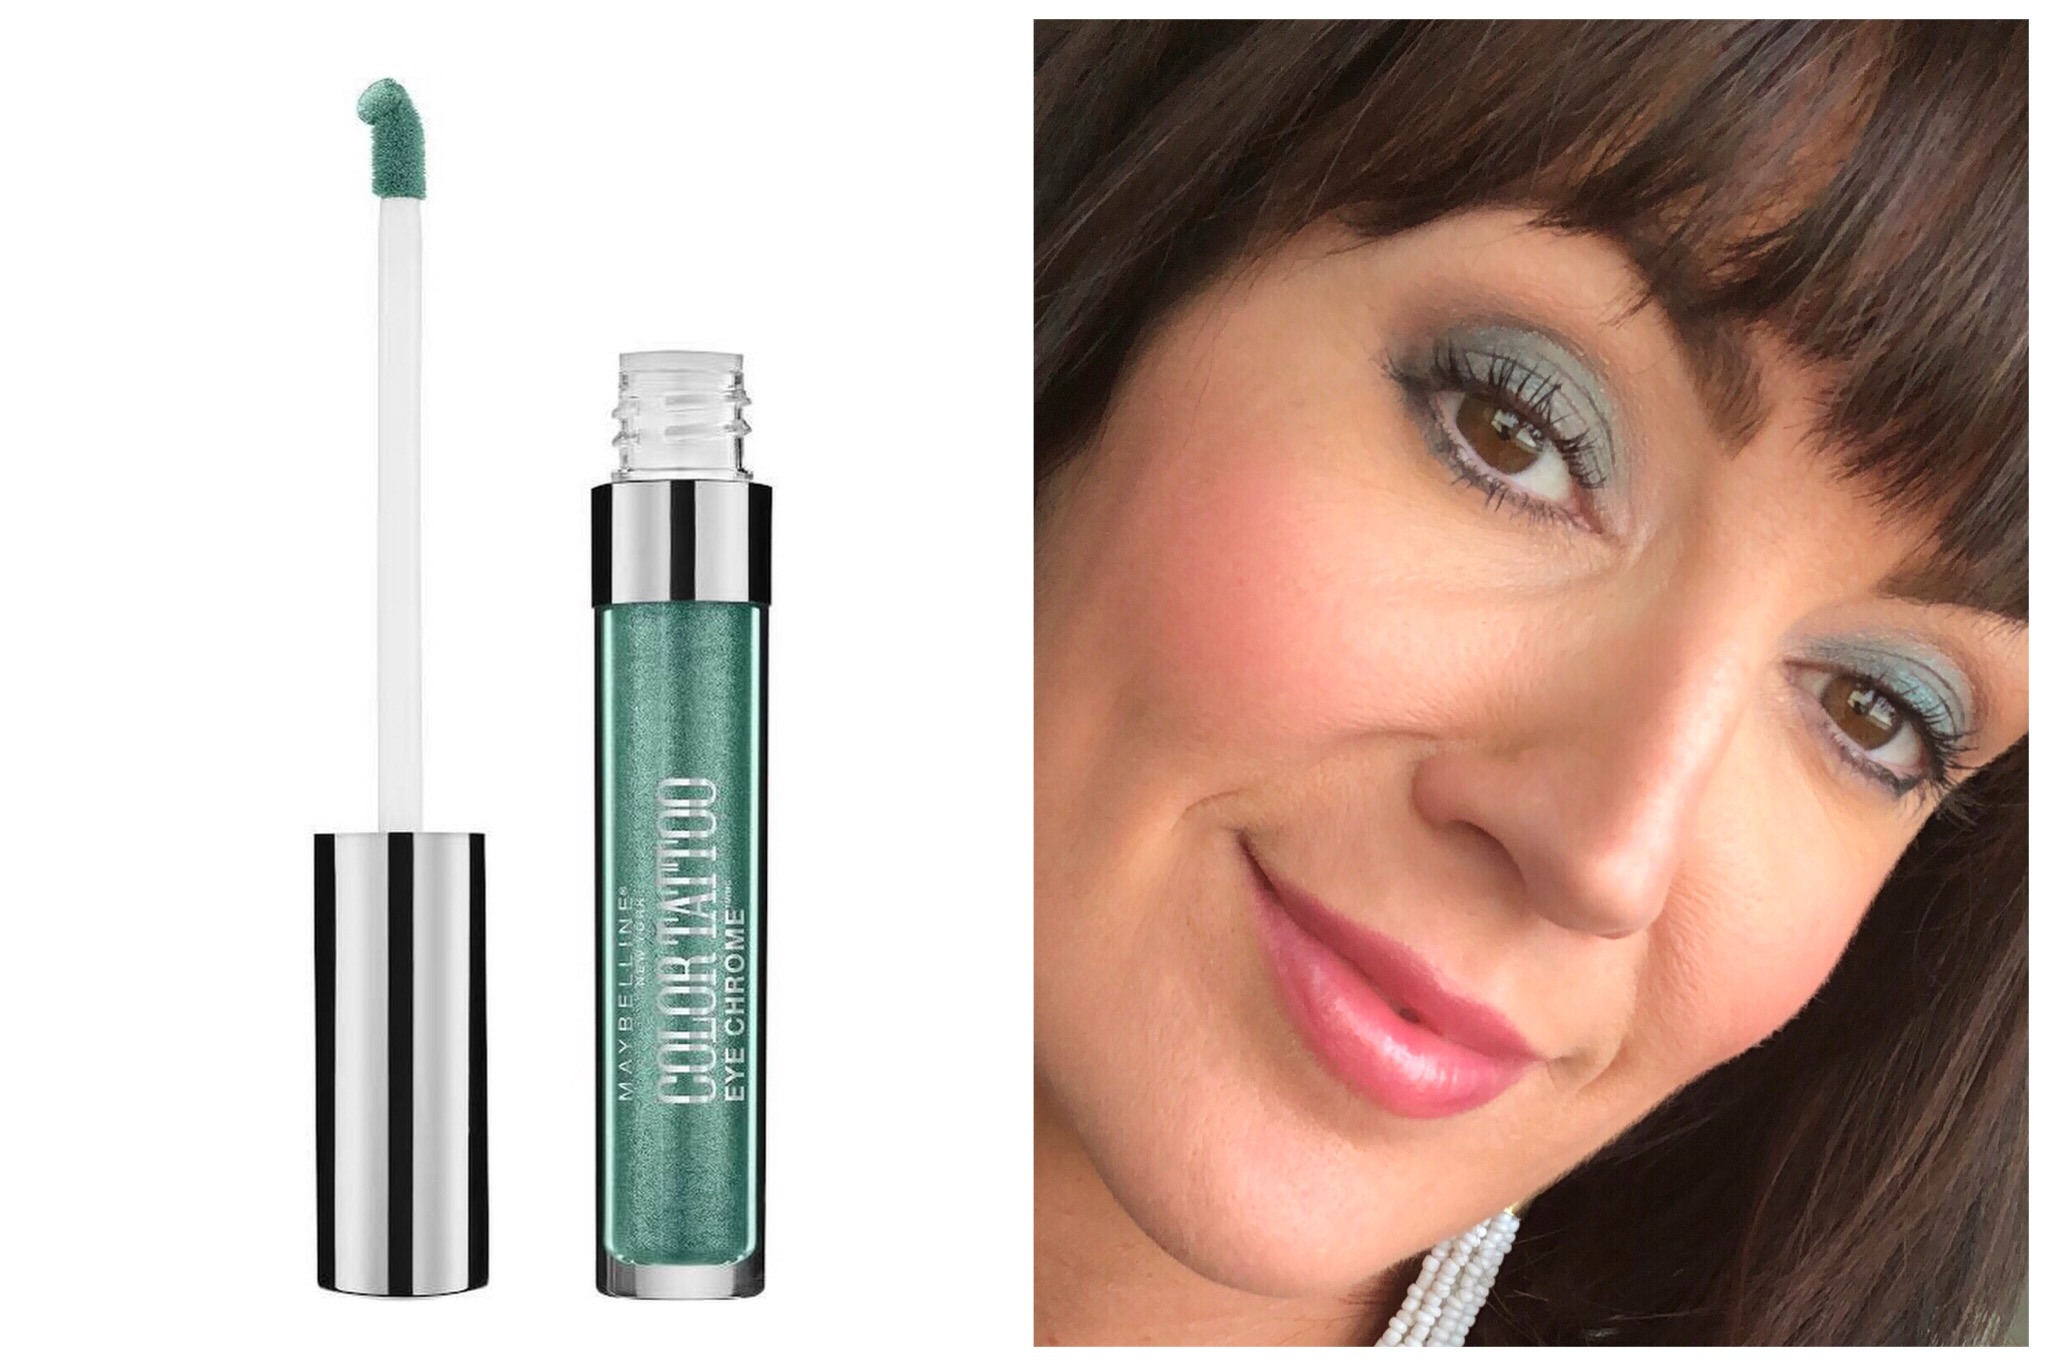 Top 5 Drugstore Mascaras For Every Lash - JennySue Makeup